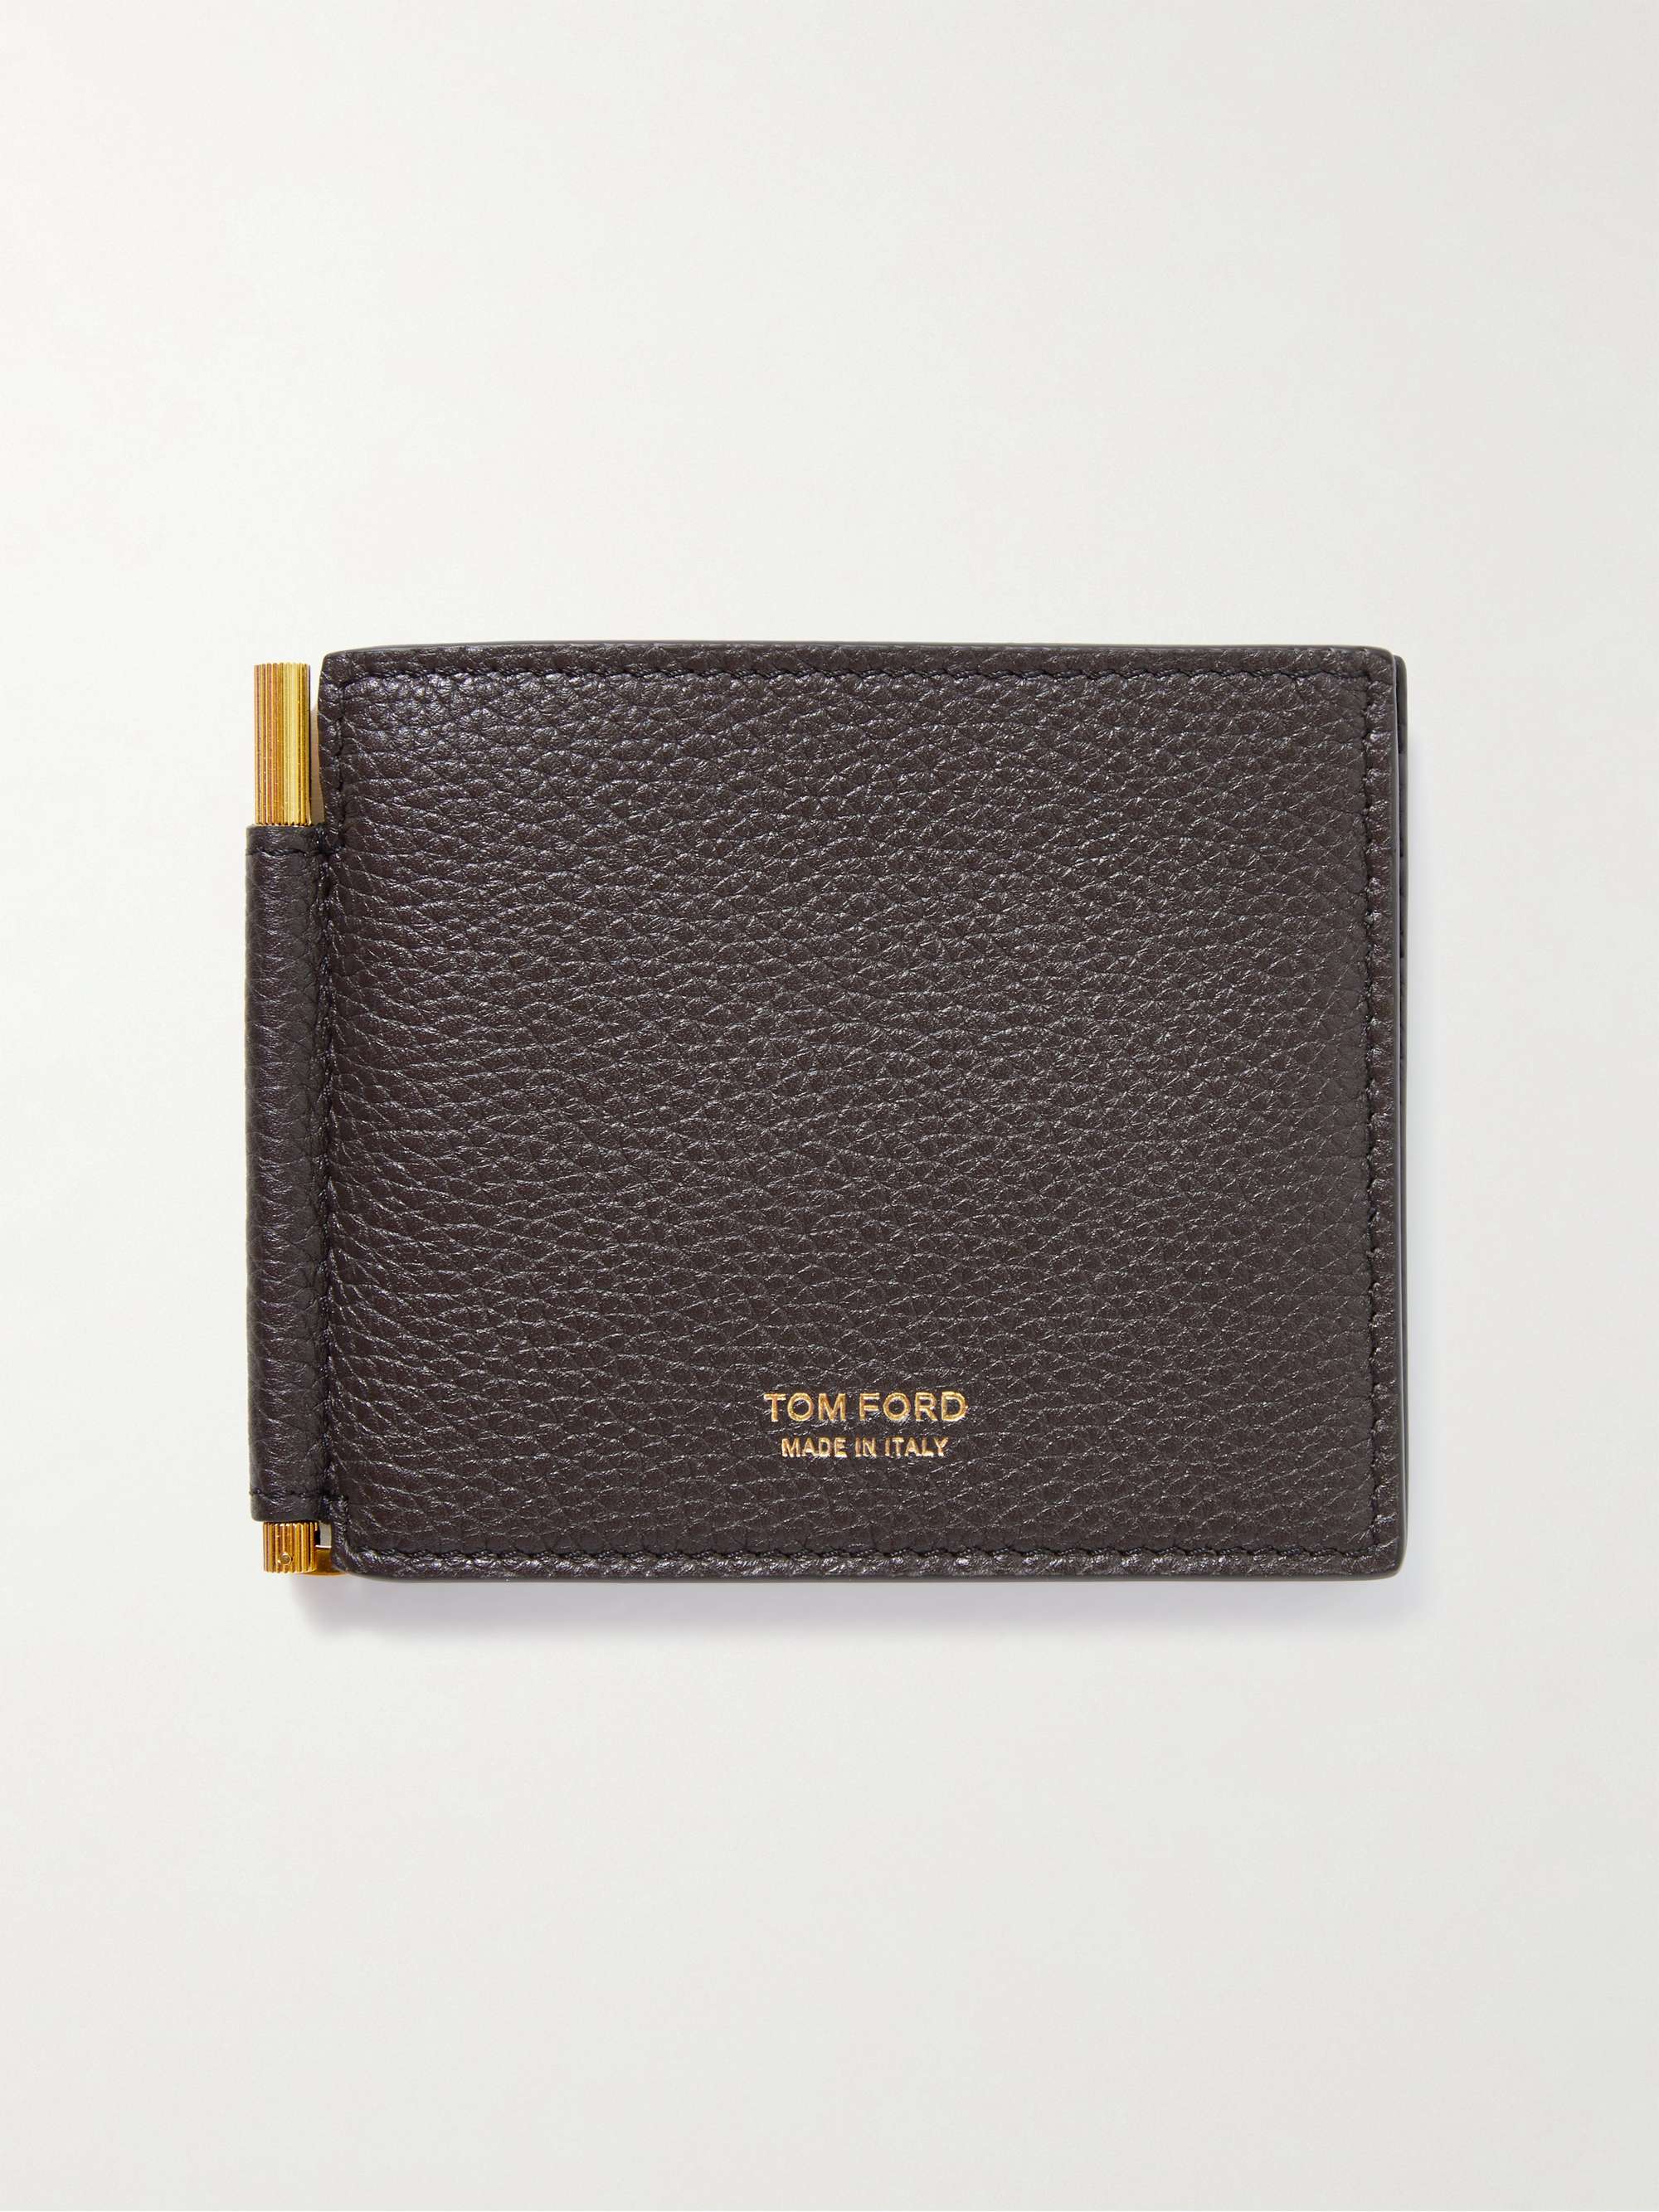 TOM FORD Full-Grain Leather Billfold Wallet | ミスターポーター